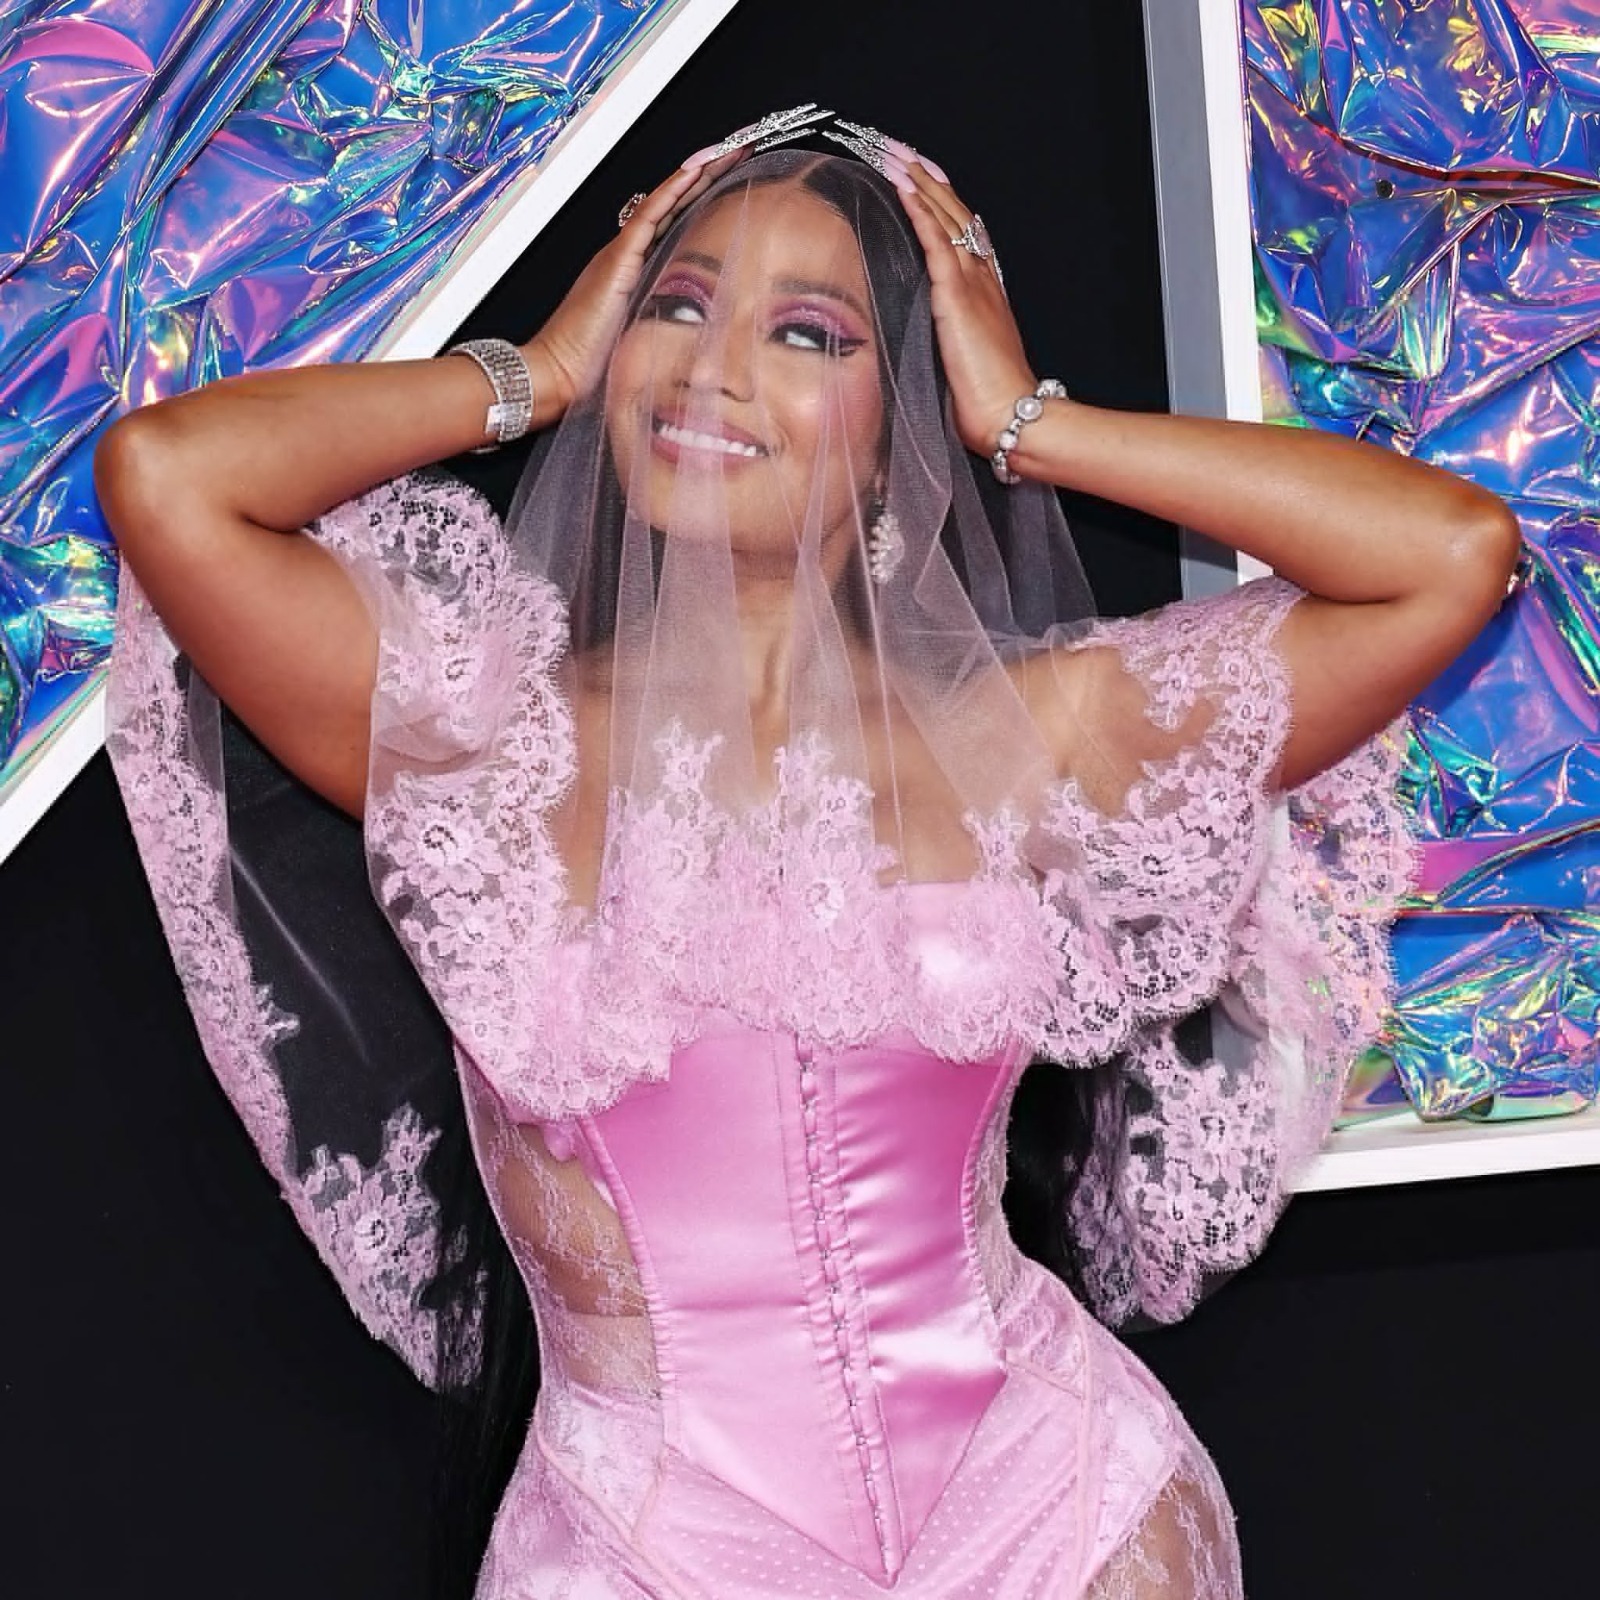 Nicki Minaj Says She Regrets Plastic Surgery After Seeing Older